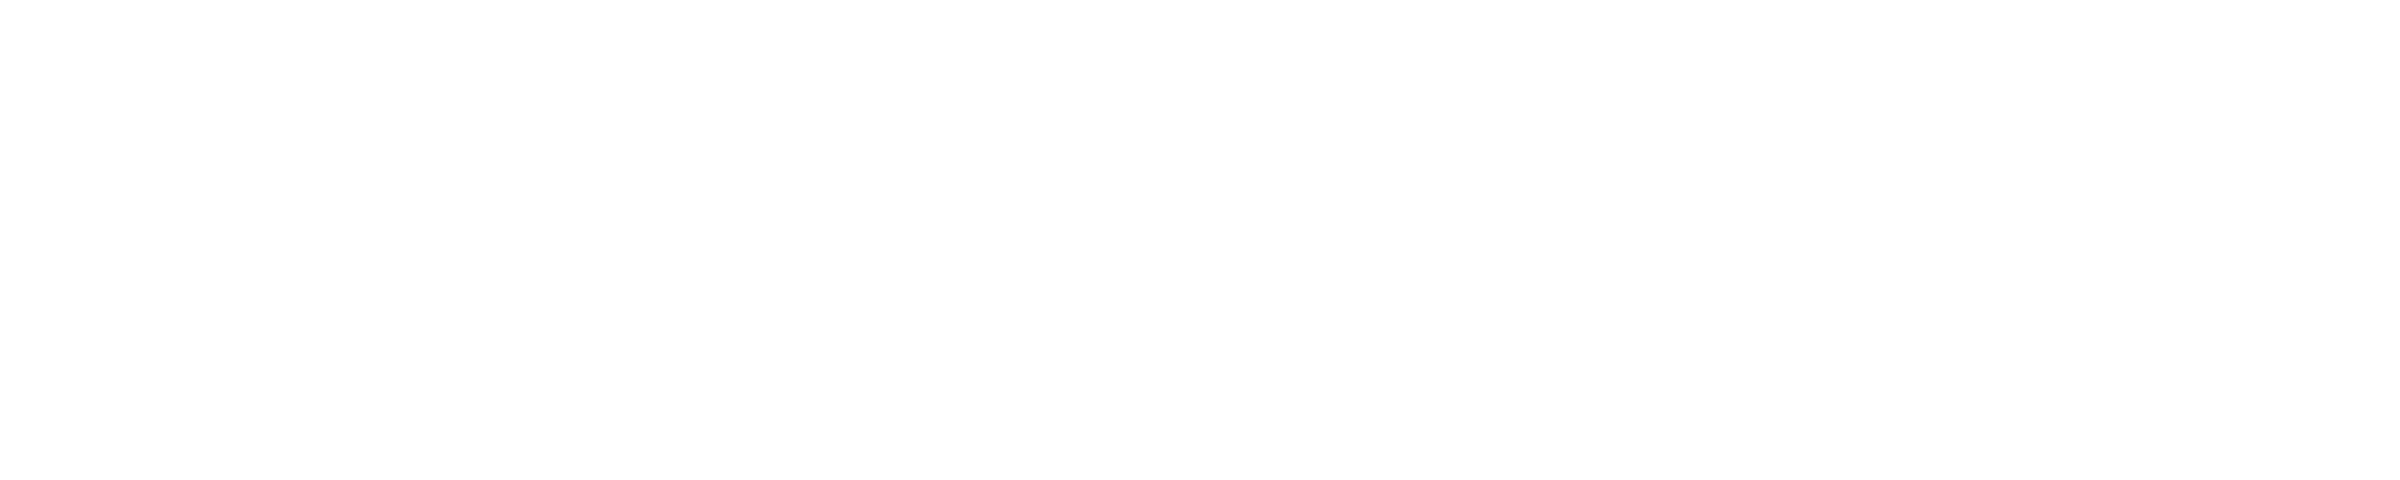 Renren Logo - Renren Logo PNG Transparent & SVG Vector - Freebie Supply